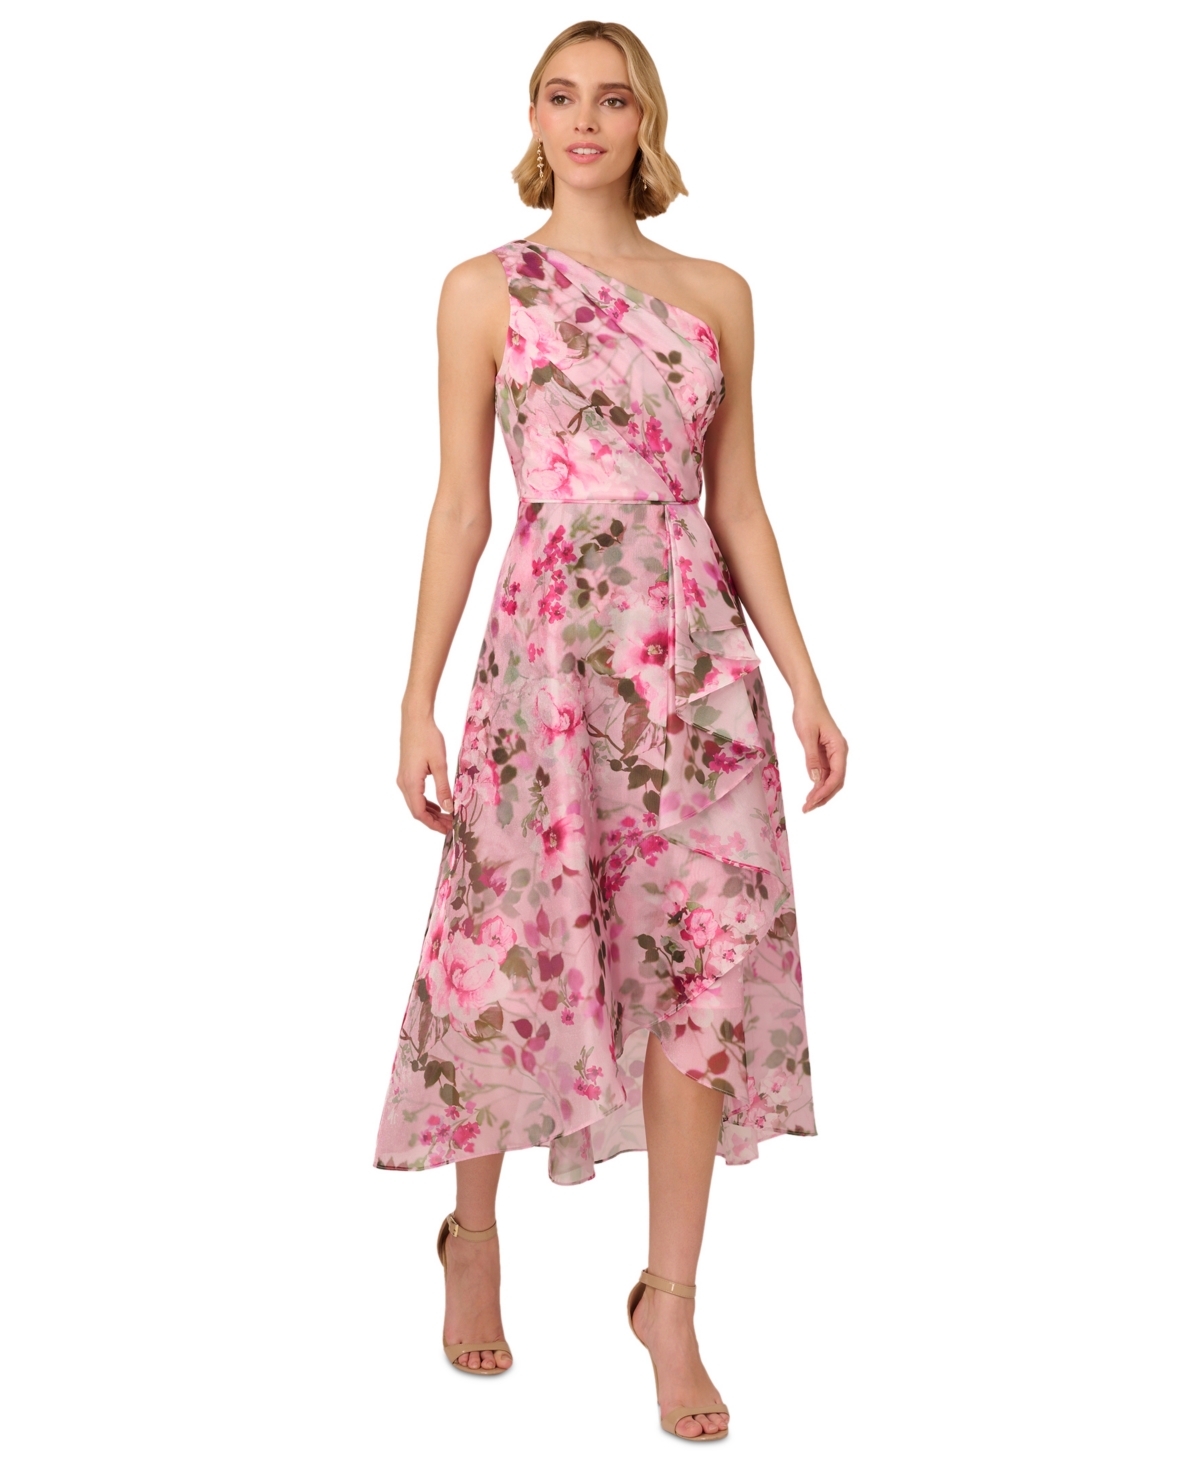 Women's Printed One-Shoulder High-Low Dress - Pink Multi